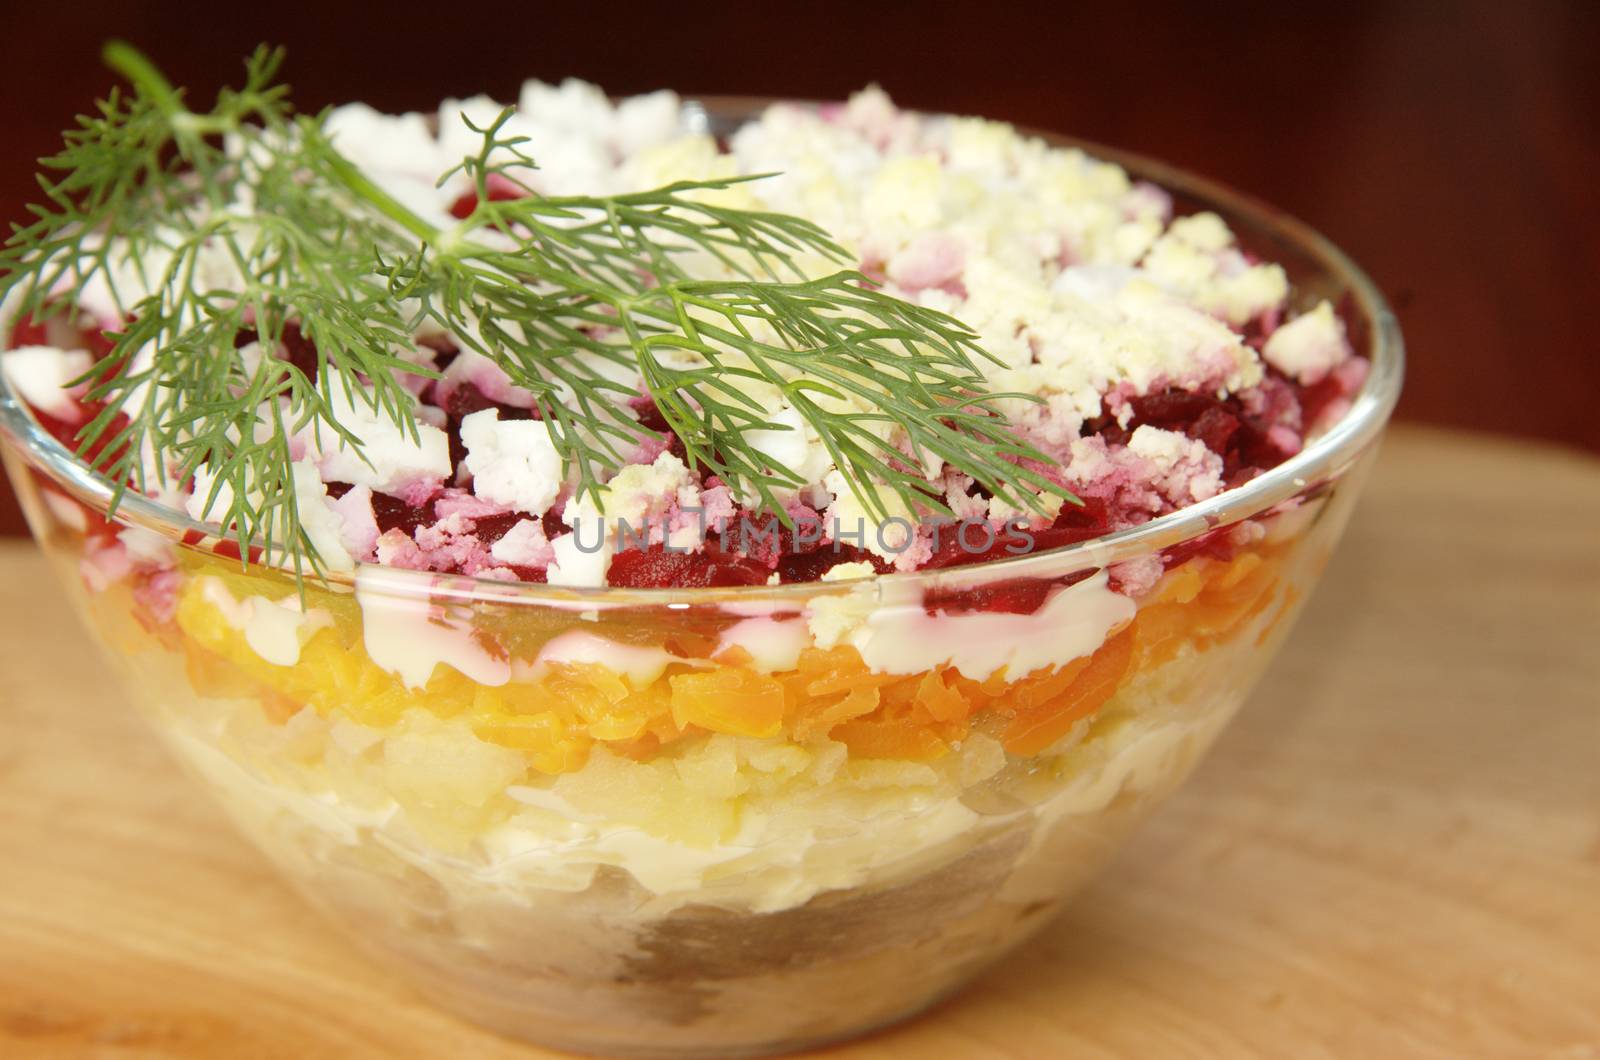 Russian traditional herring salad by Ravenestling